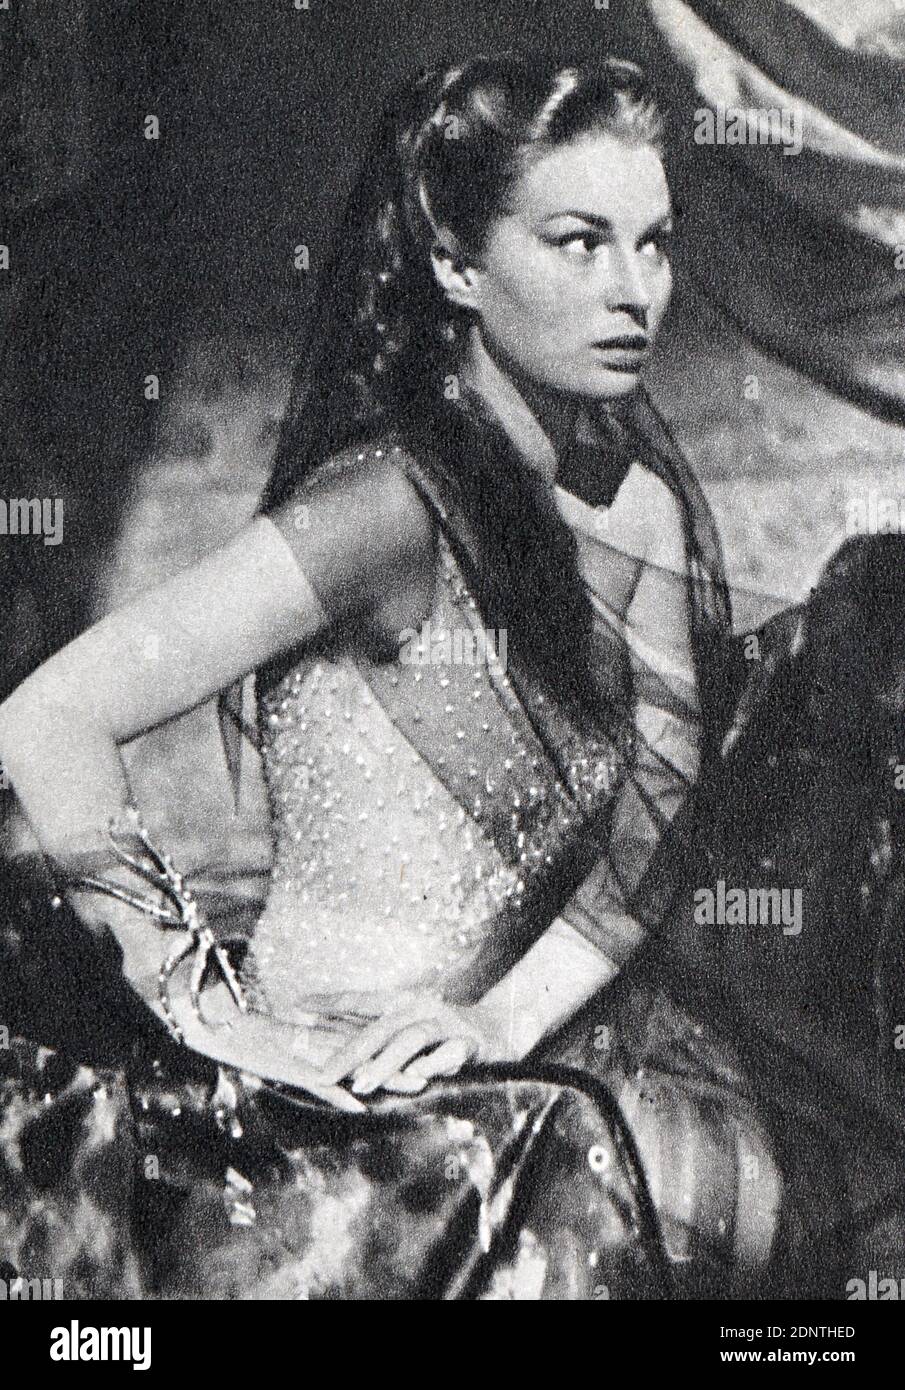 Film still of Silvana Mangano (1930-1989) from 'Ulysses'. Stock Photo